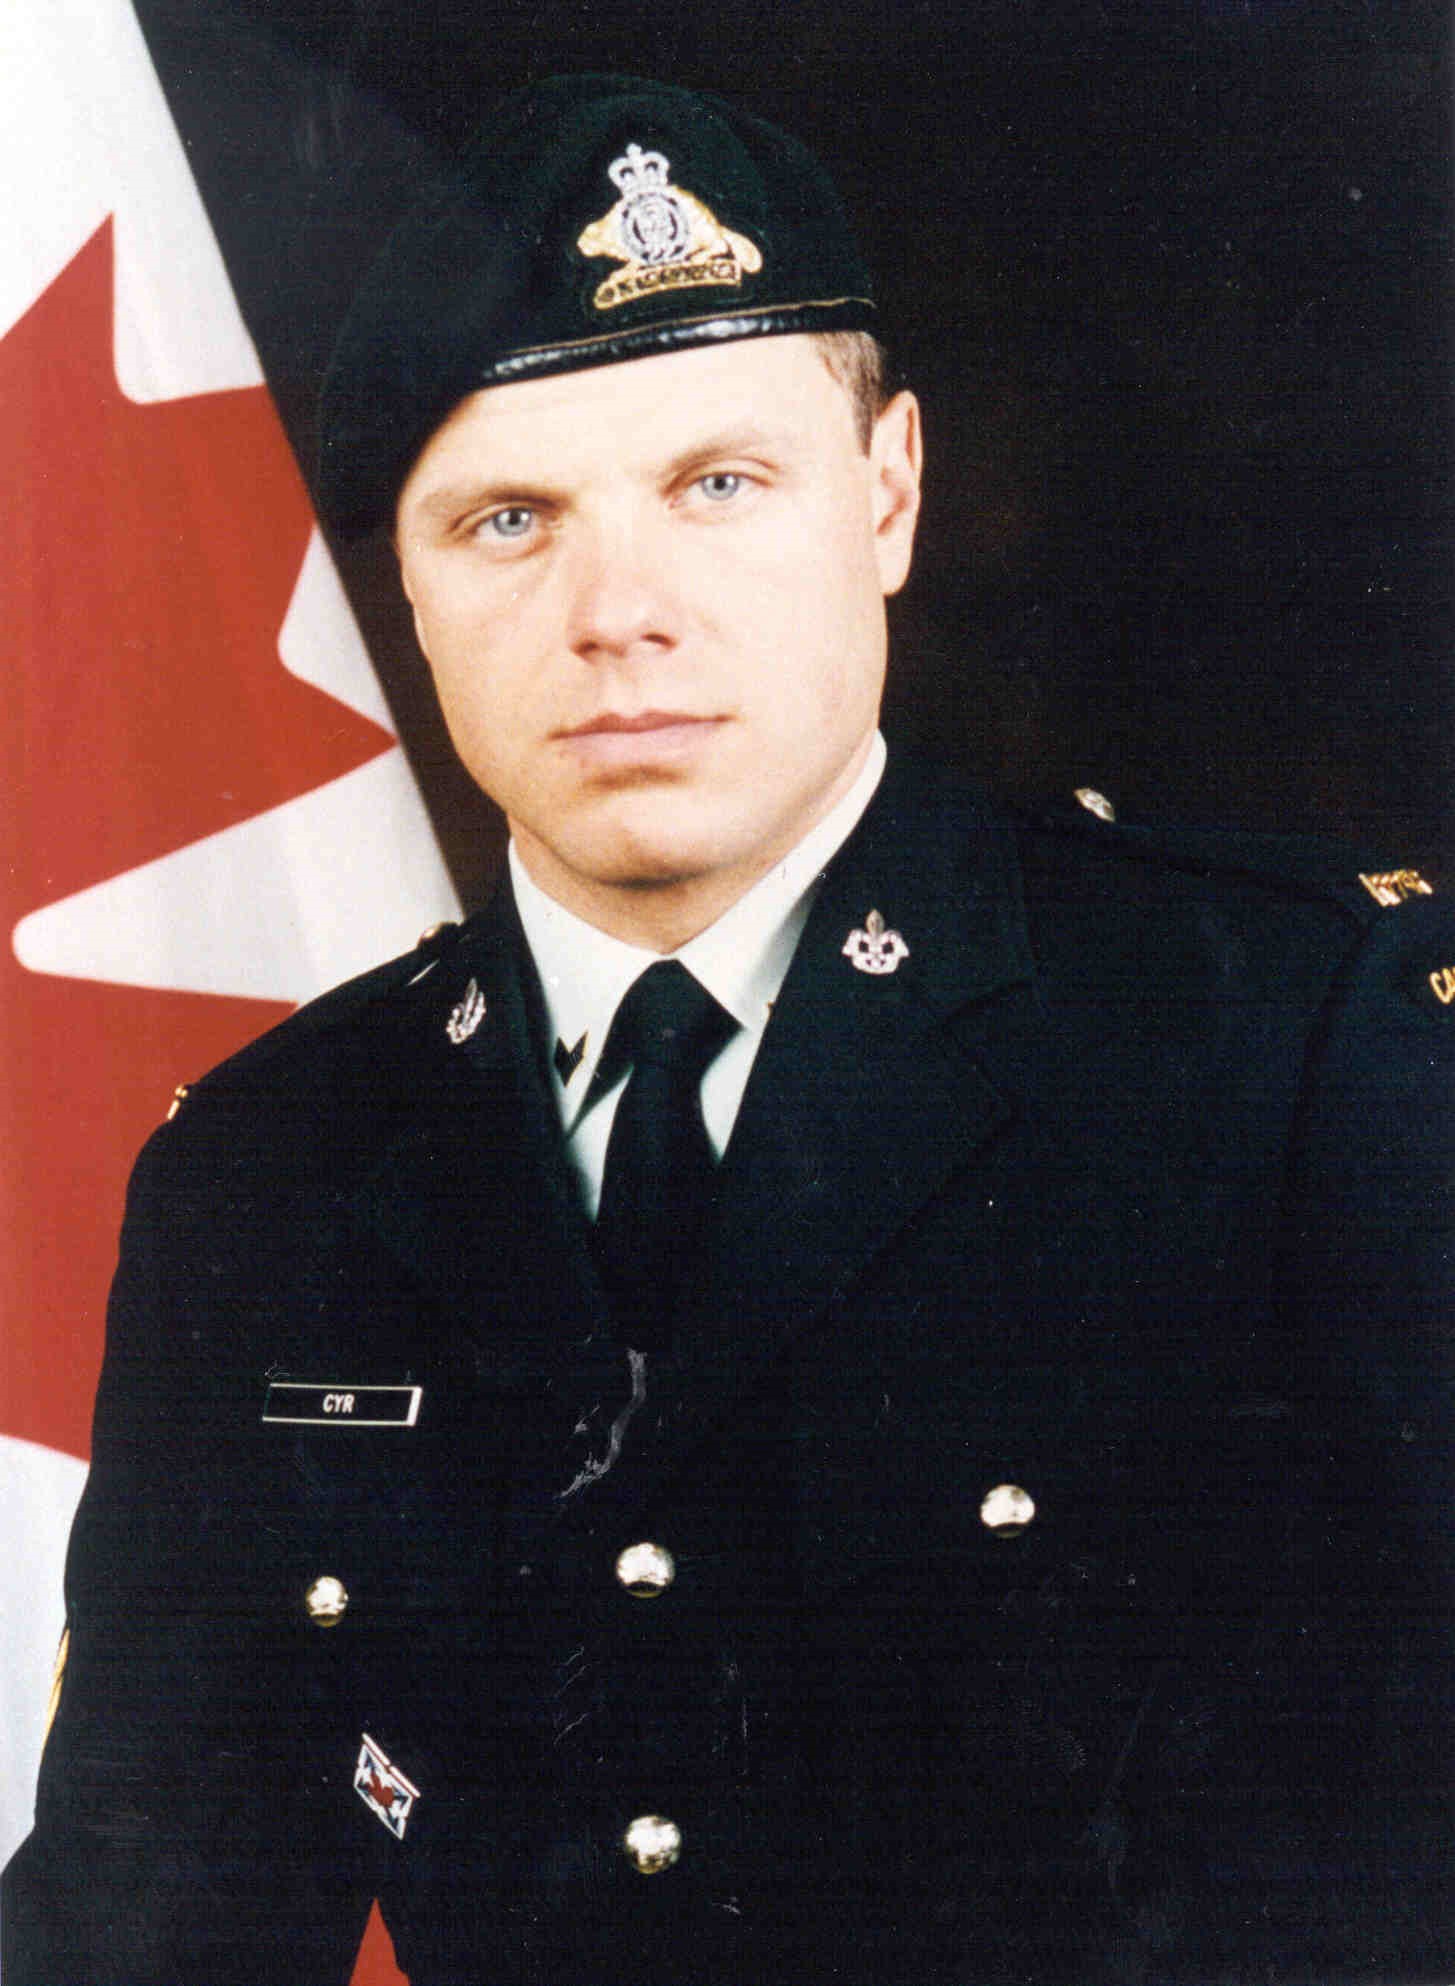 Corporal Steve Cyr